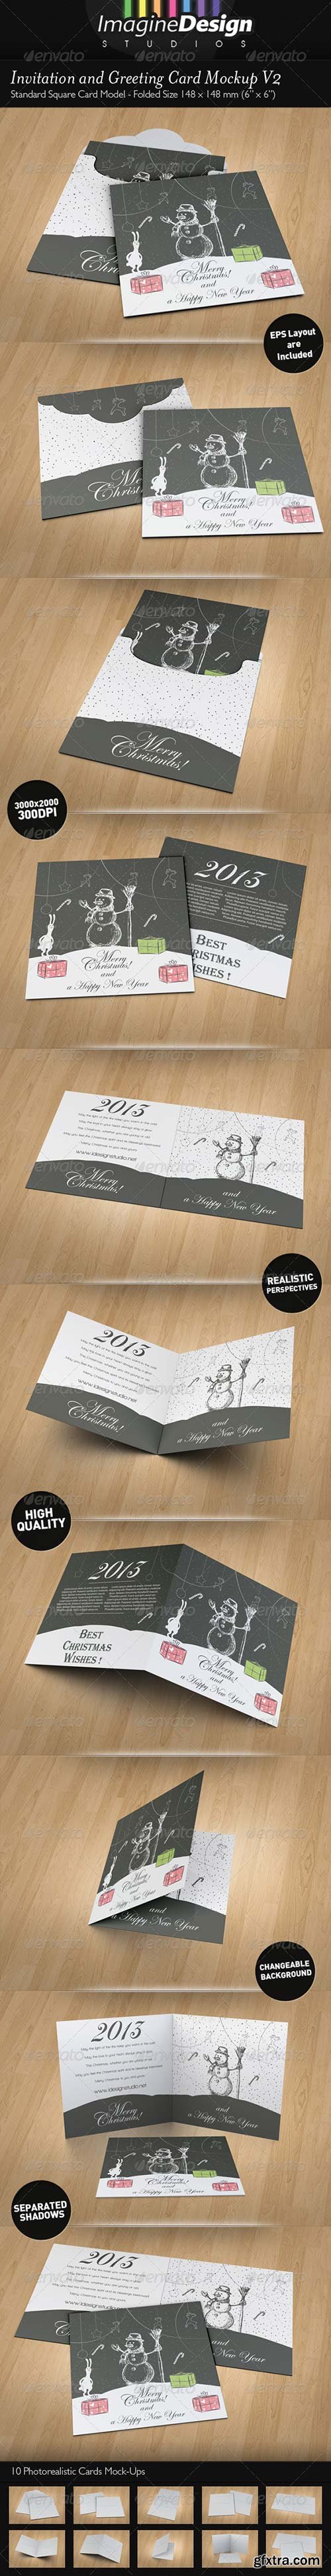 GraphicRiver - Invitation and Greeting Card Mockup V2